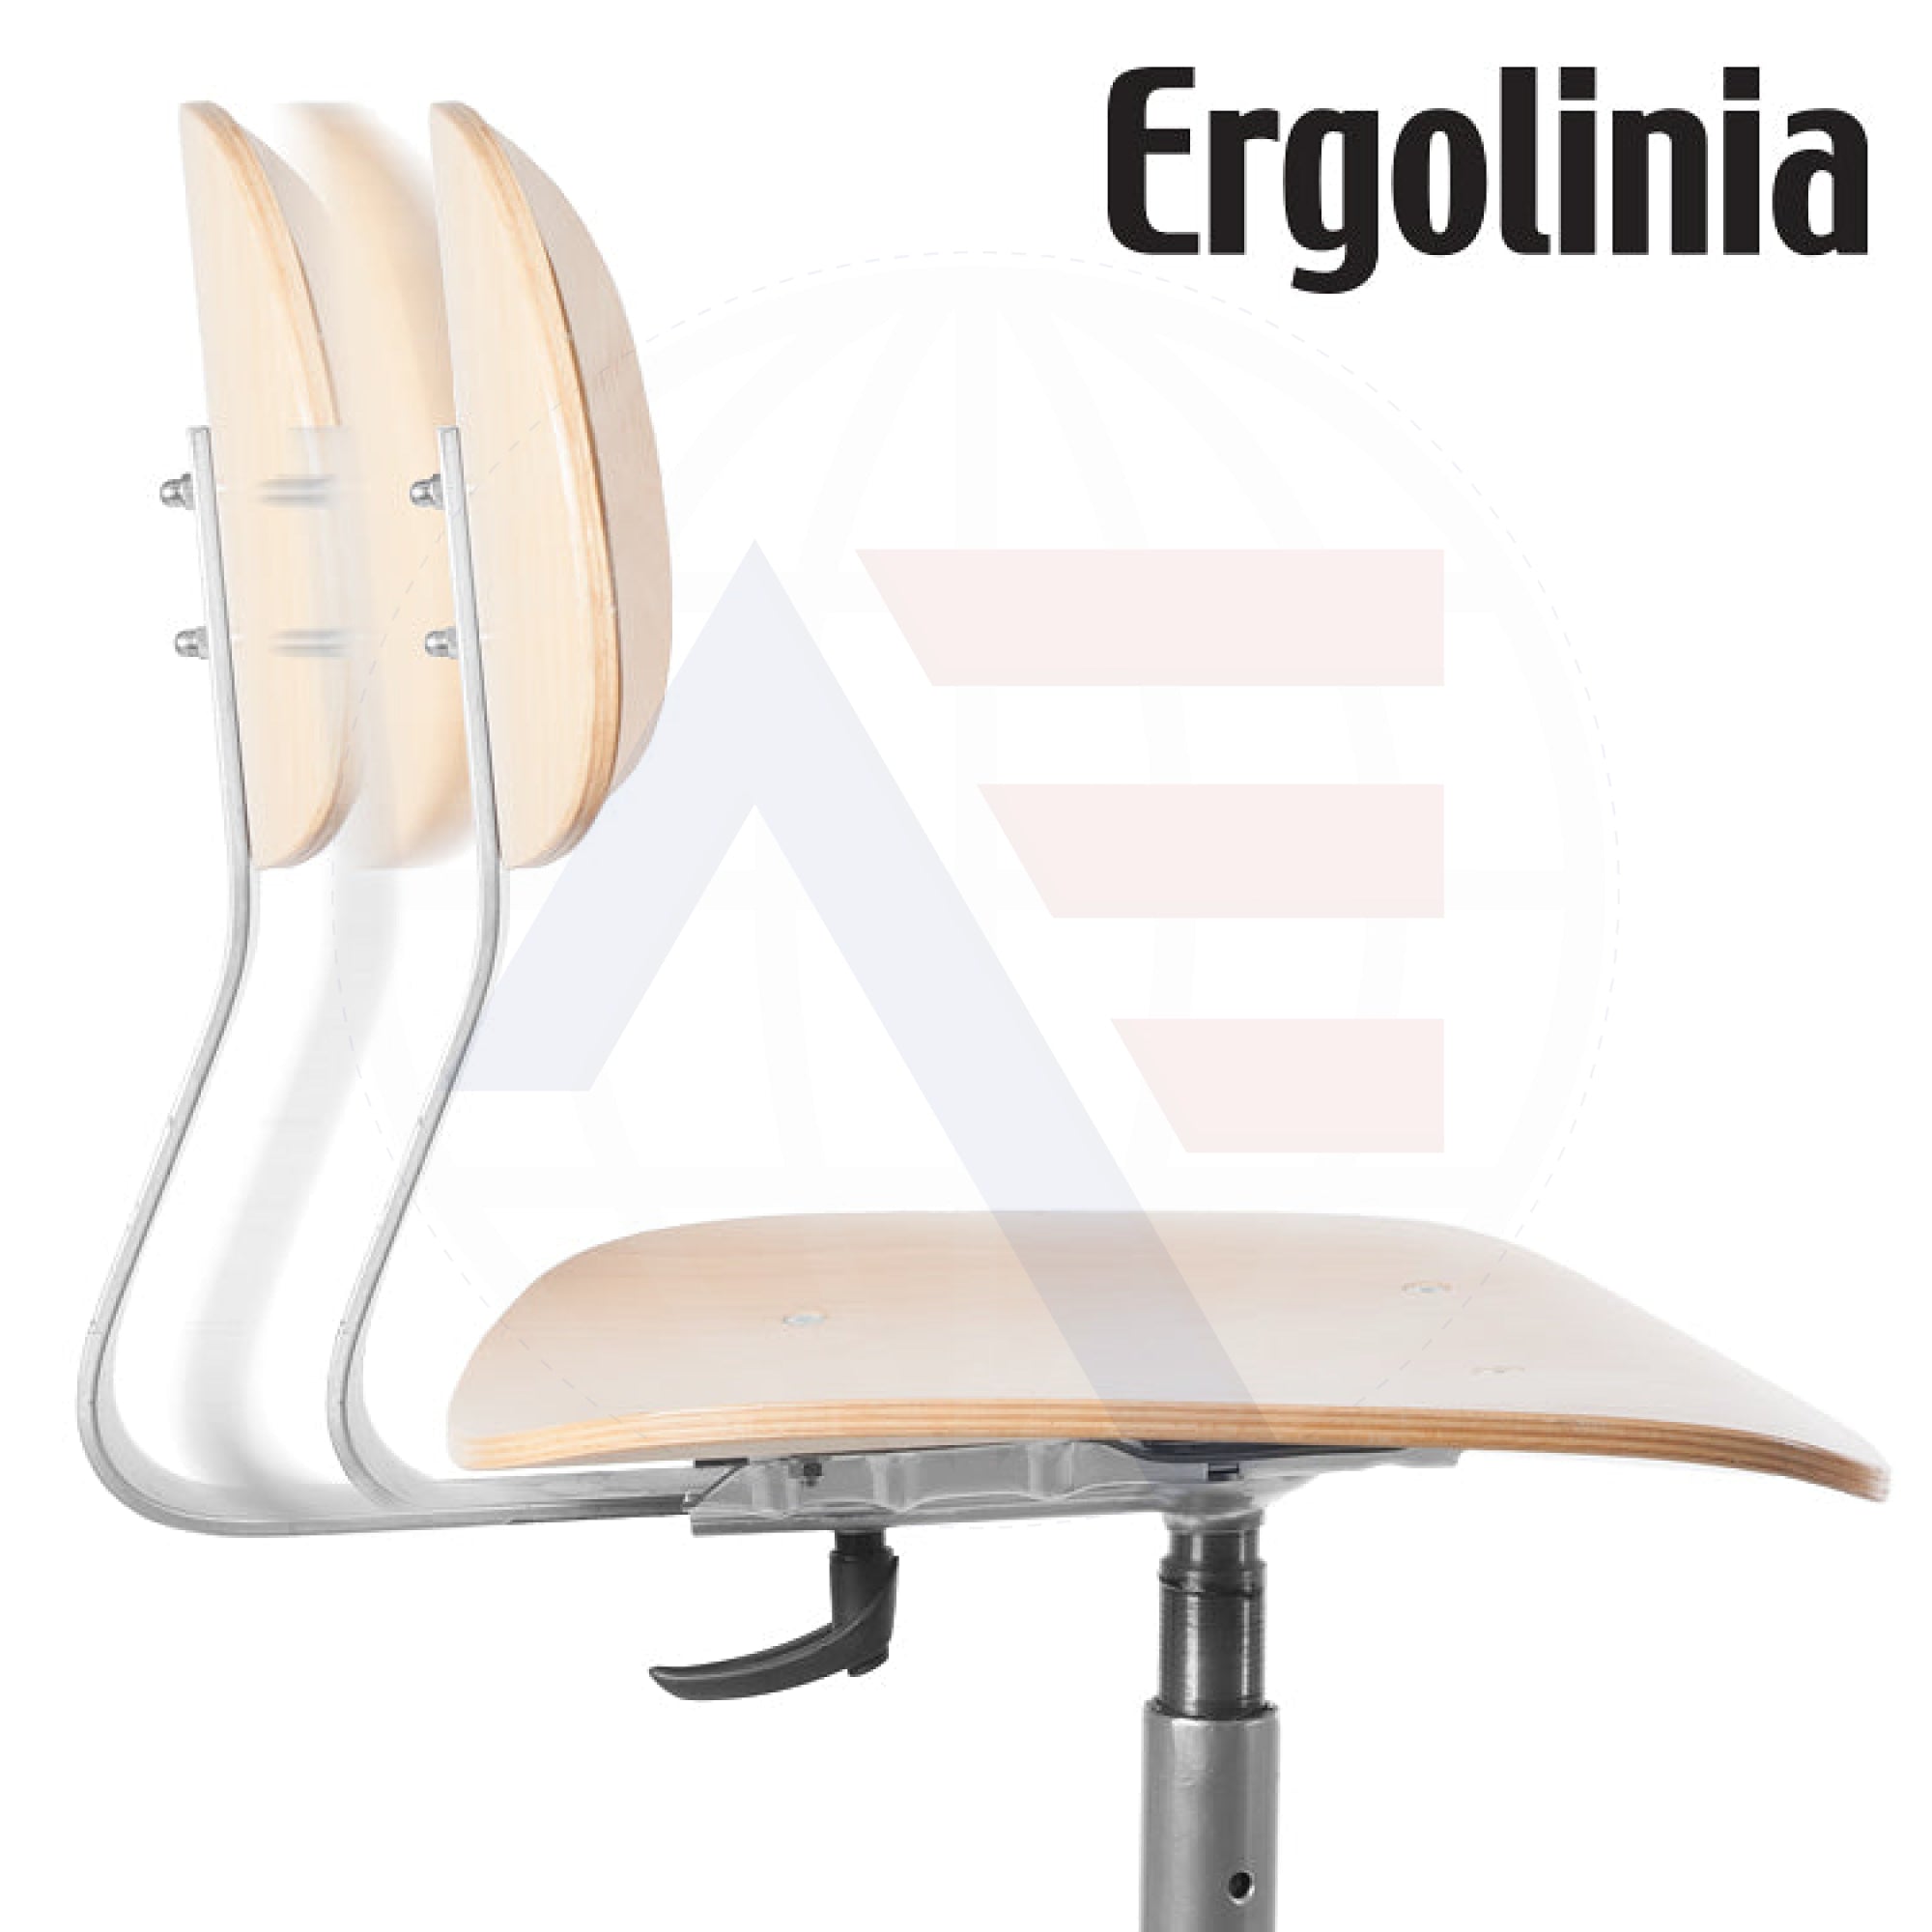 Ergolinia 10004 Ply Industrial Rotary Chair